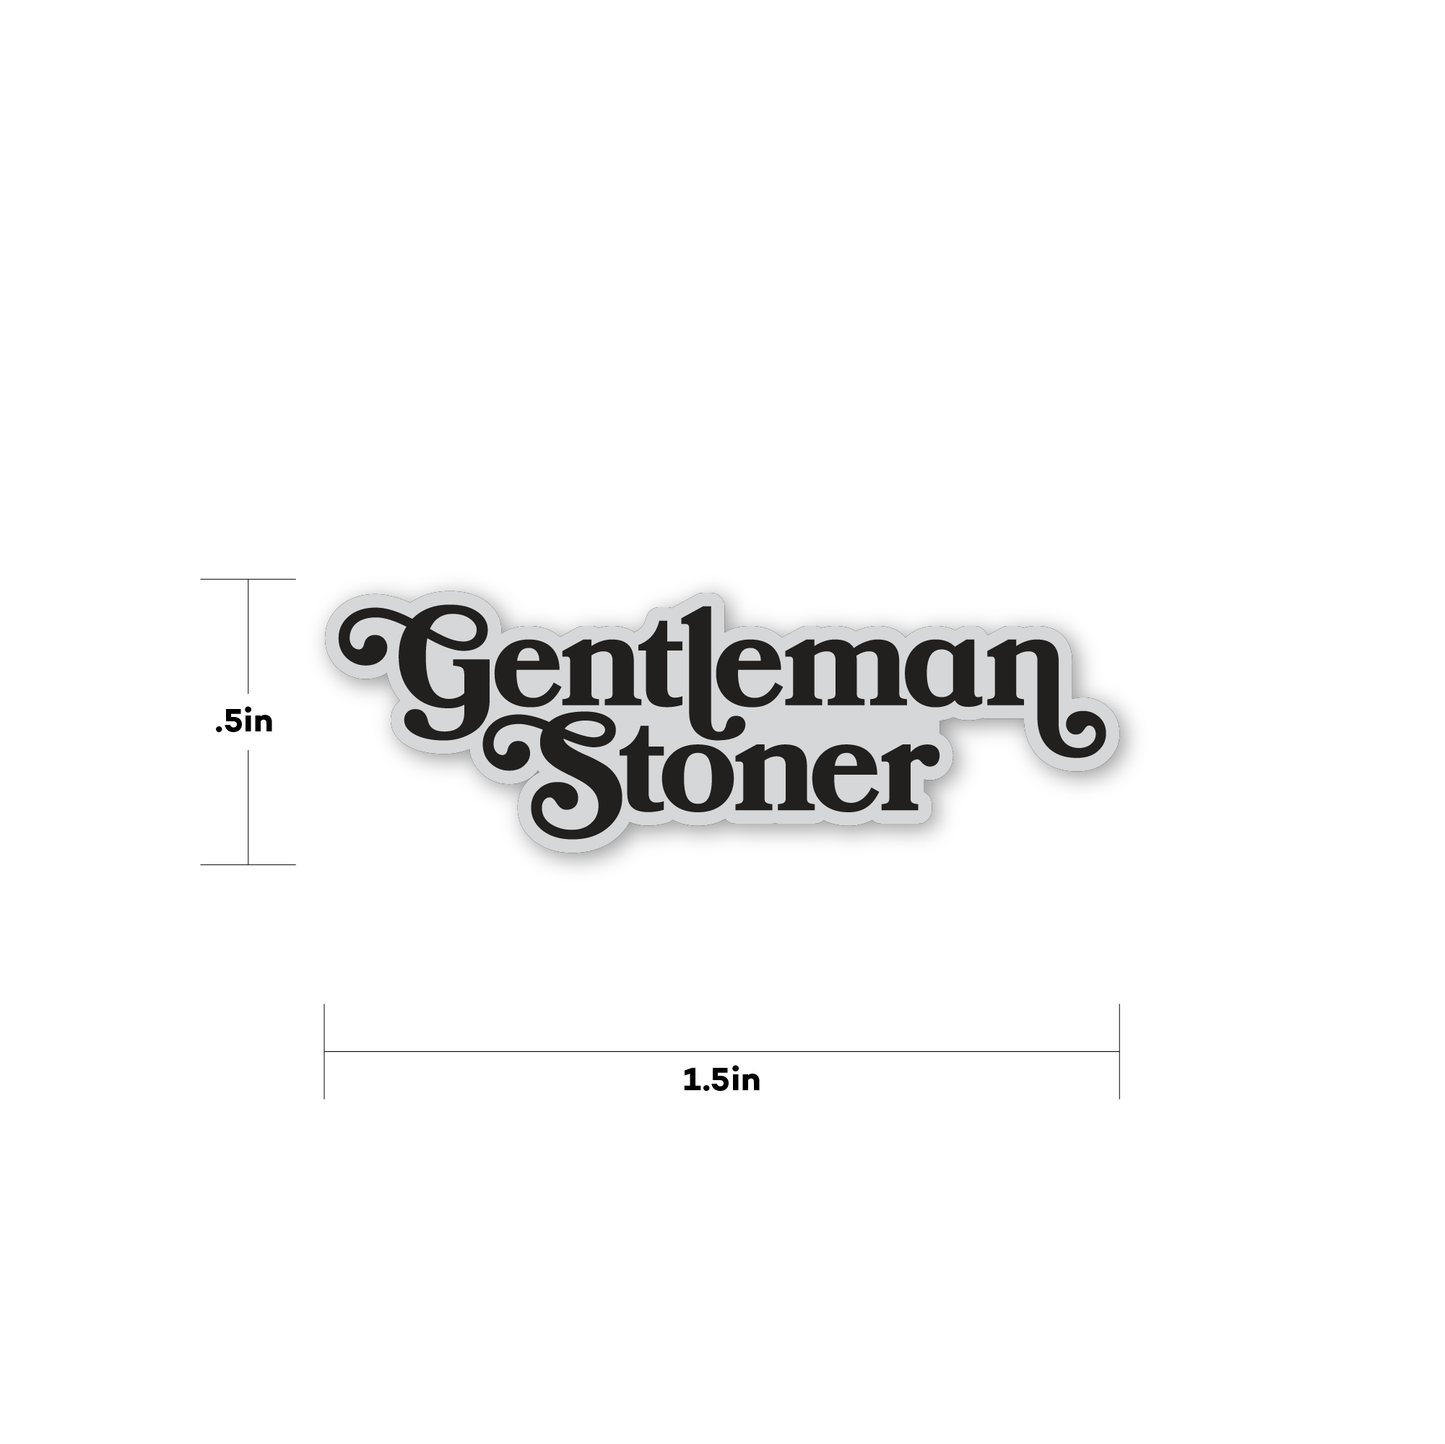 .5 in by 1.5 in silver gentleman stoner enamel pin by fntsma